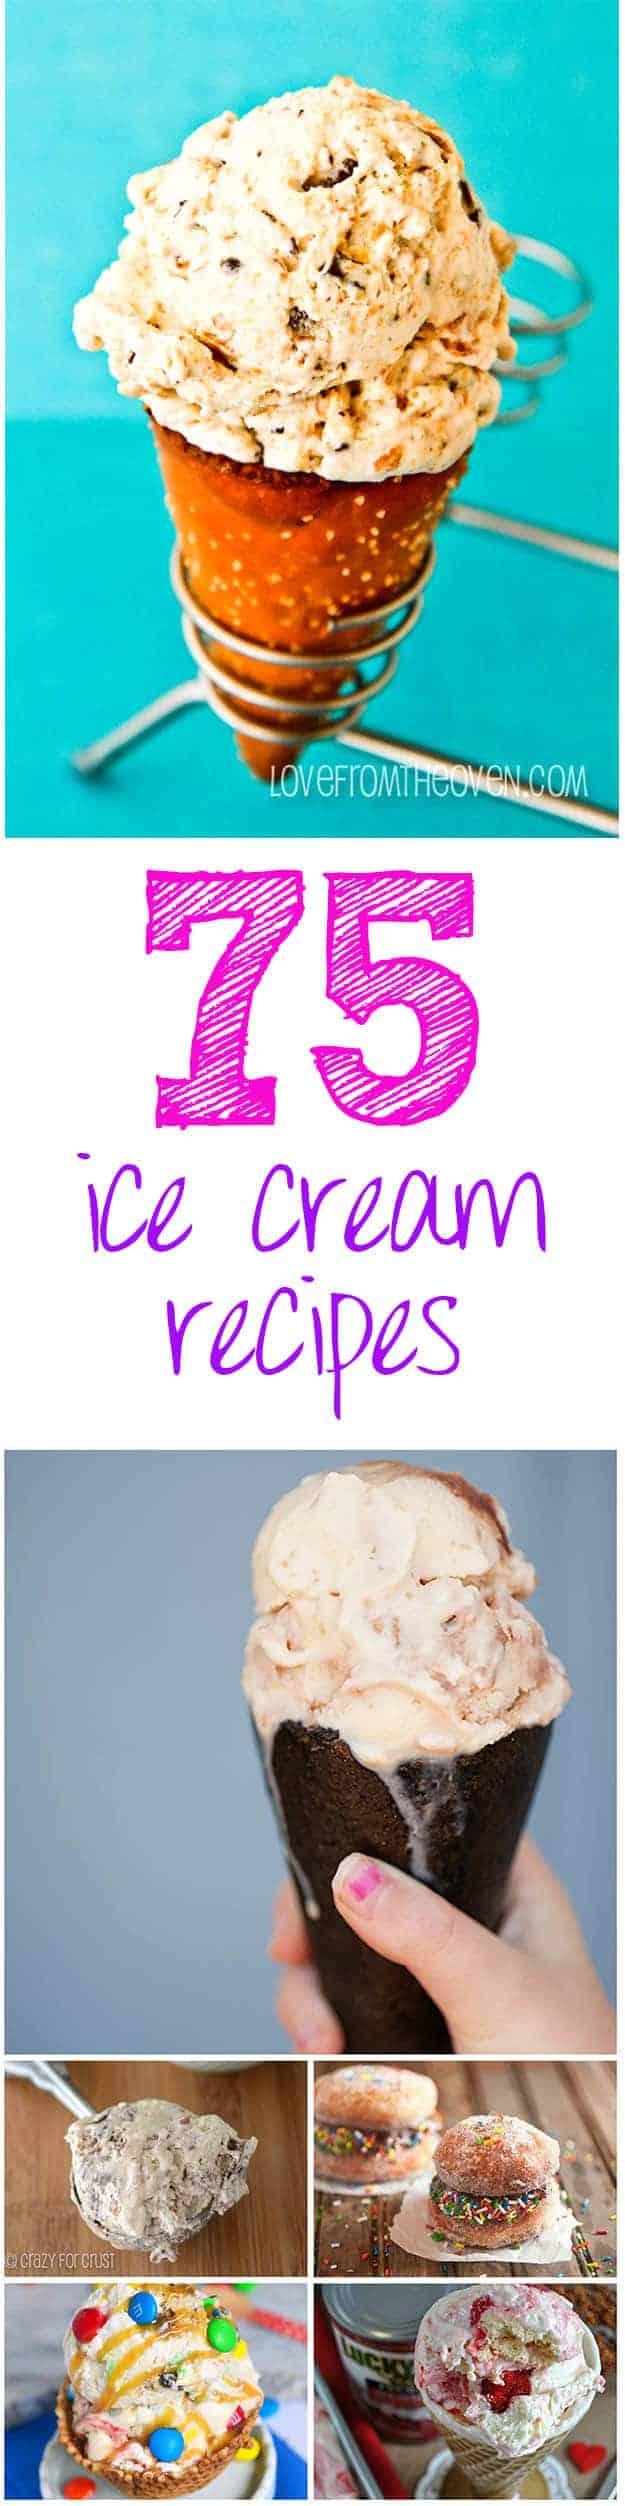 75 homemade ice cream recipes to beat the heat this summer!